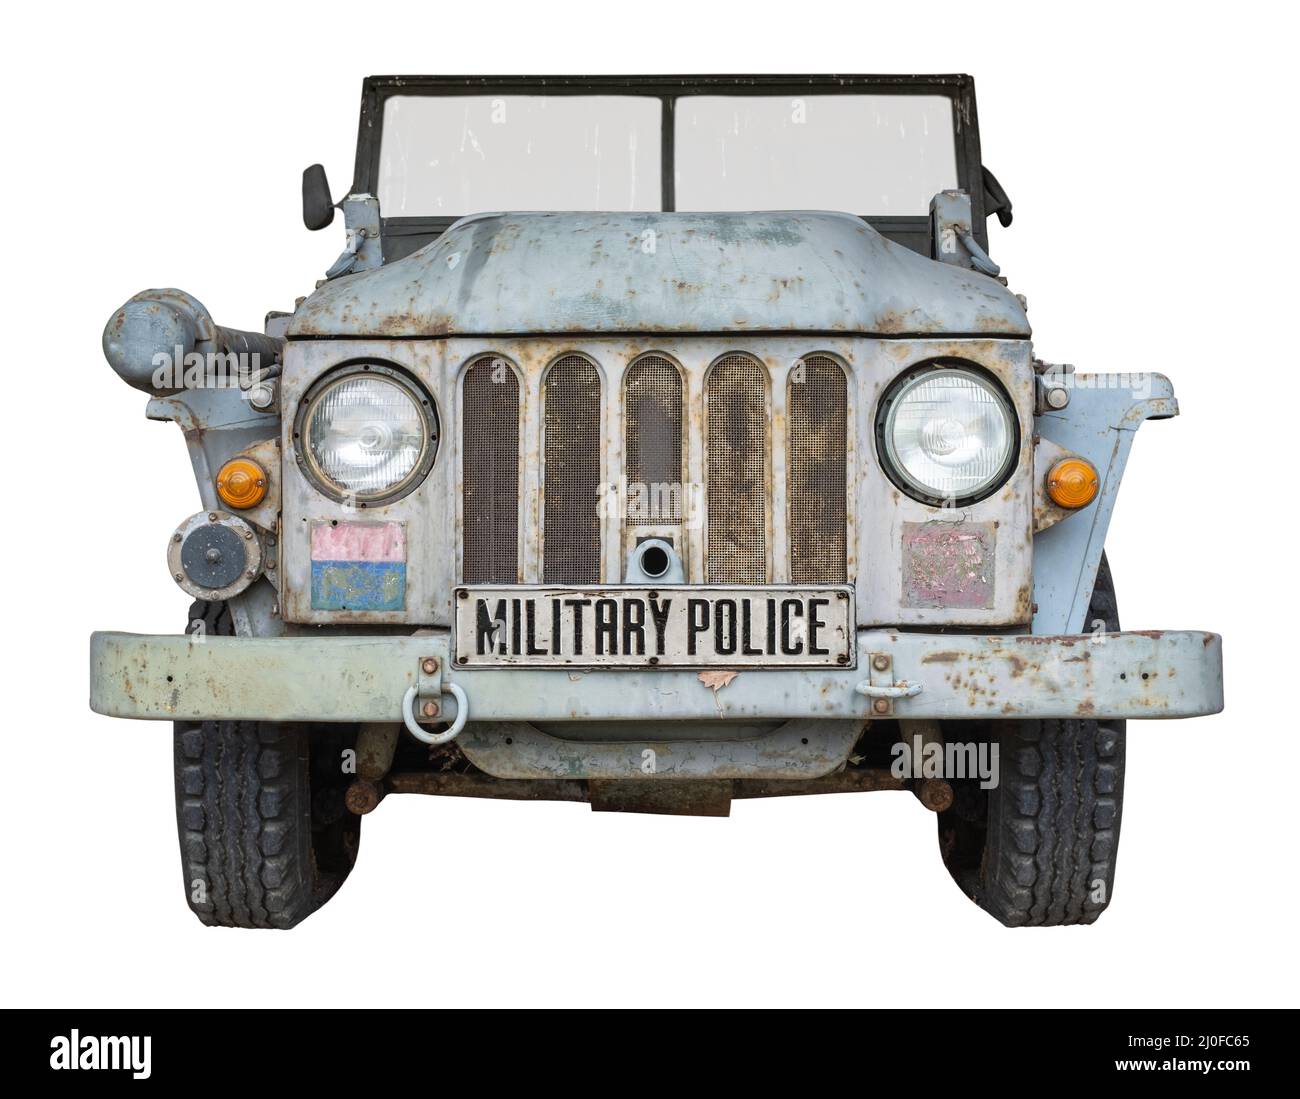 Vintage Military Police Vehicle Stock Photo